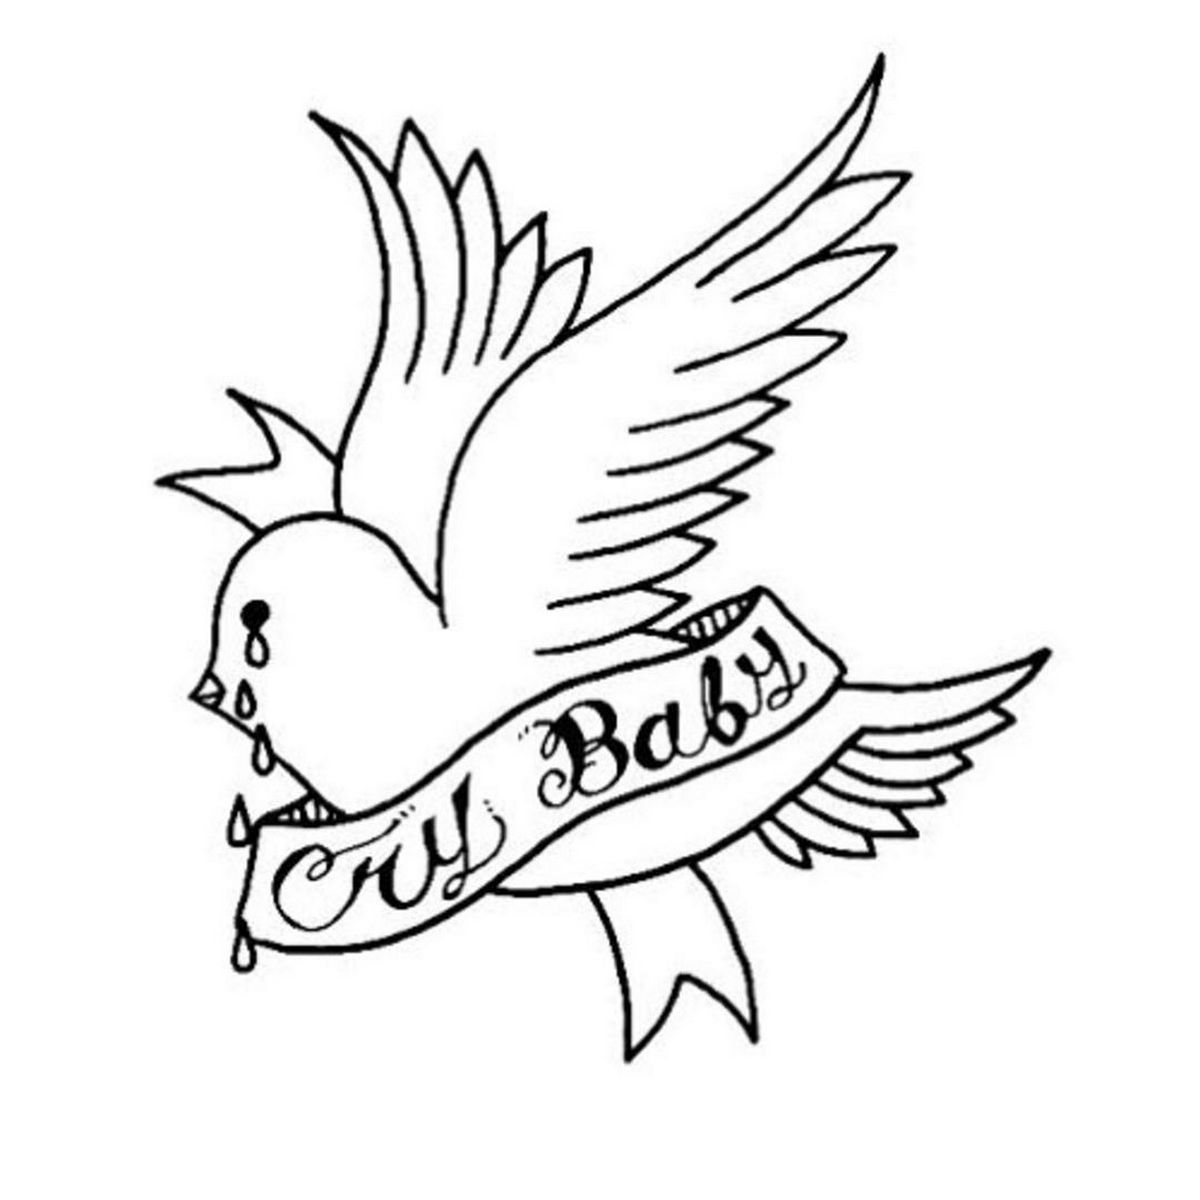 Cool Image Design - Lil Peep Crybaby Tattoo